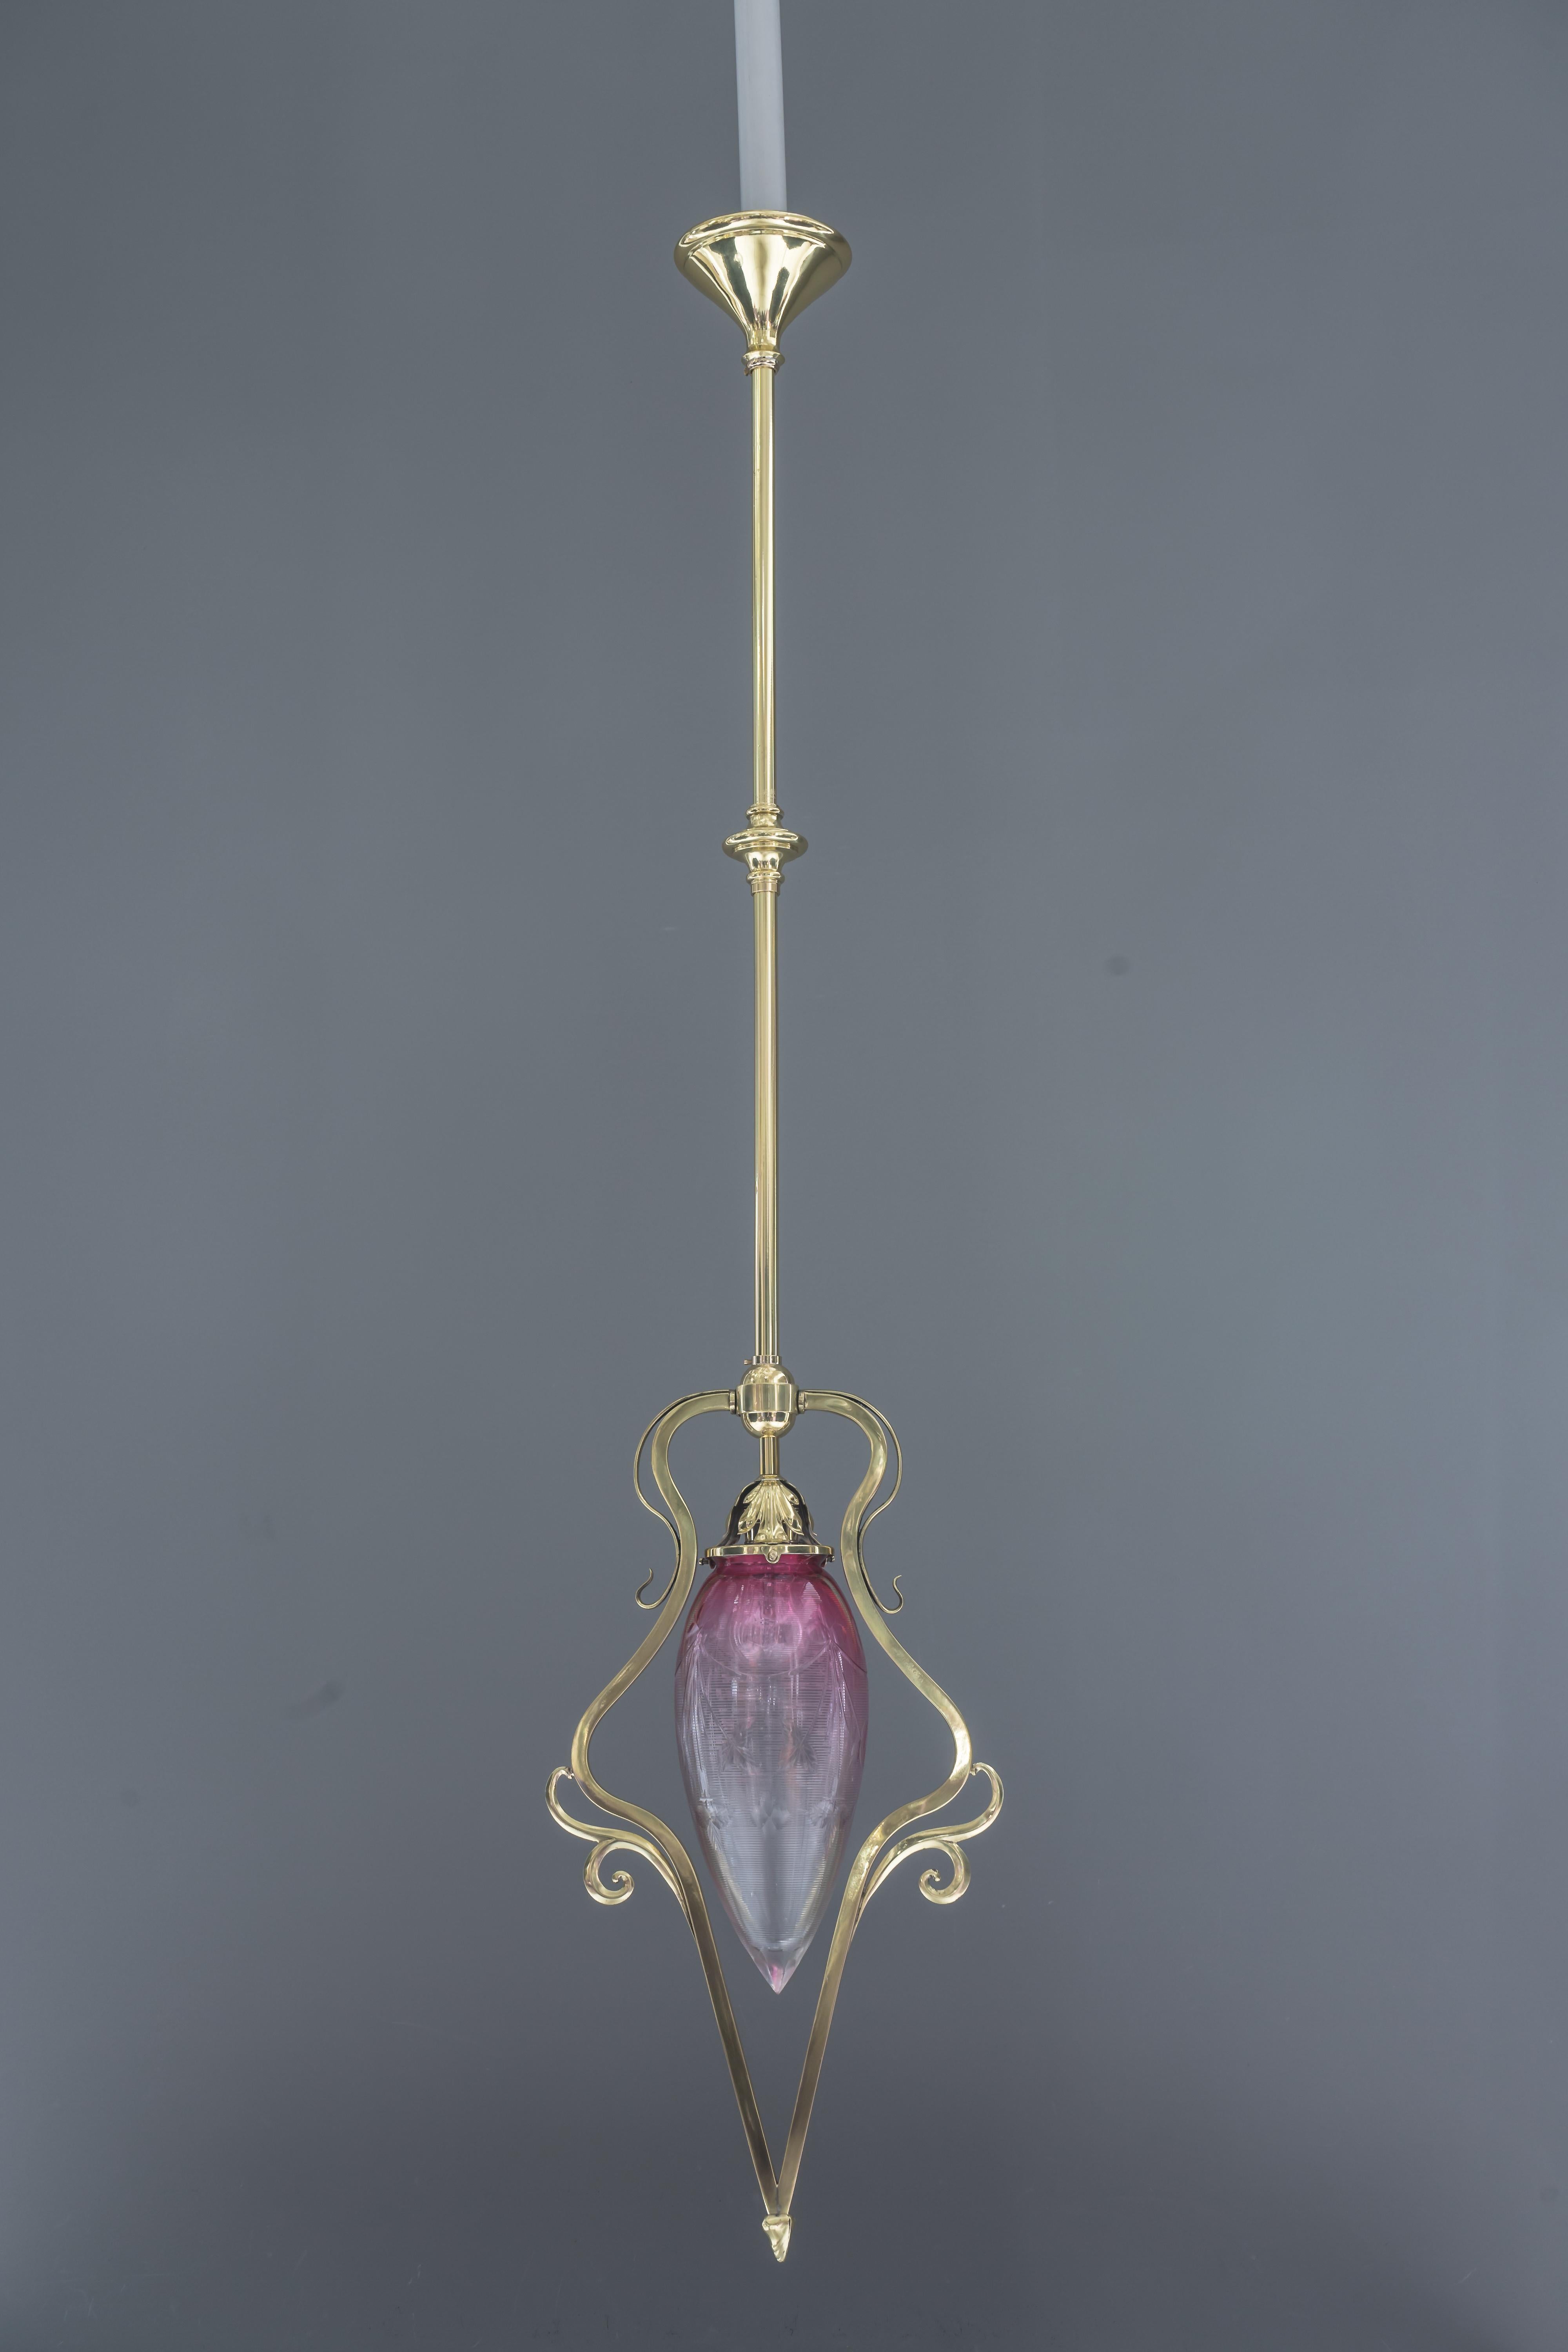 Jugendstil pendant Vienna circa 1907 with original cut glass
Brass polished and stove enameled.